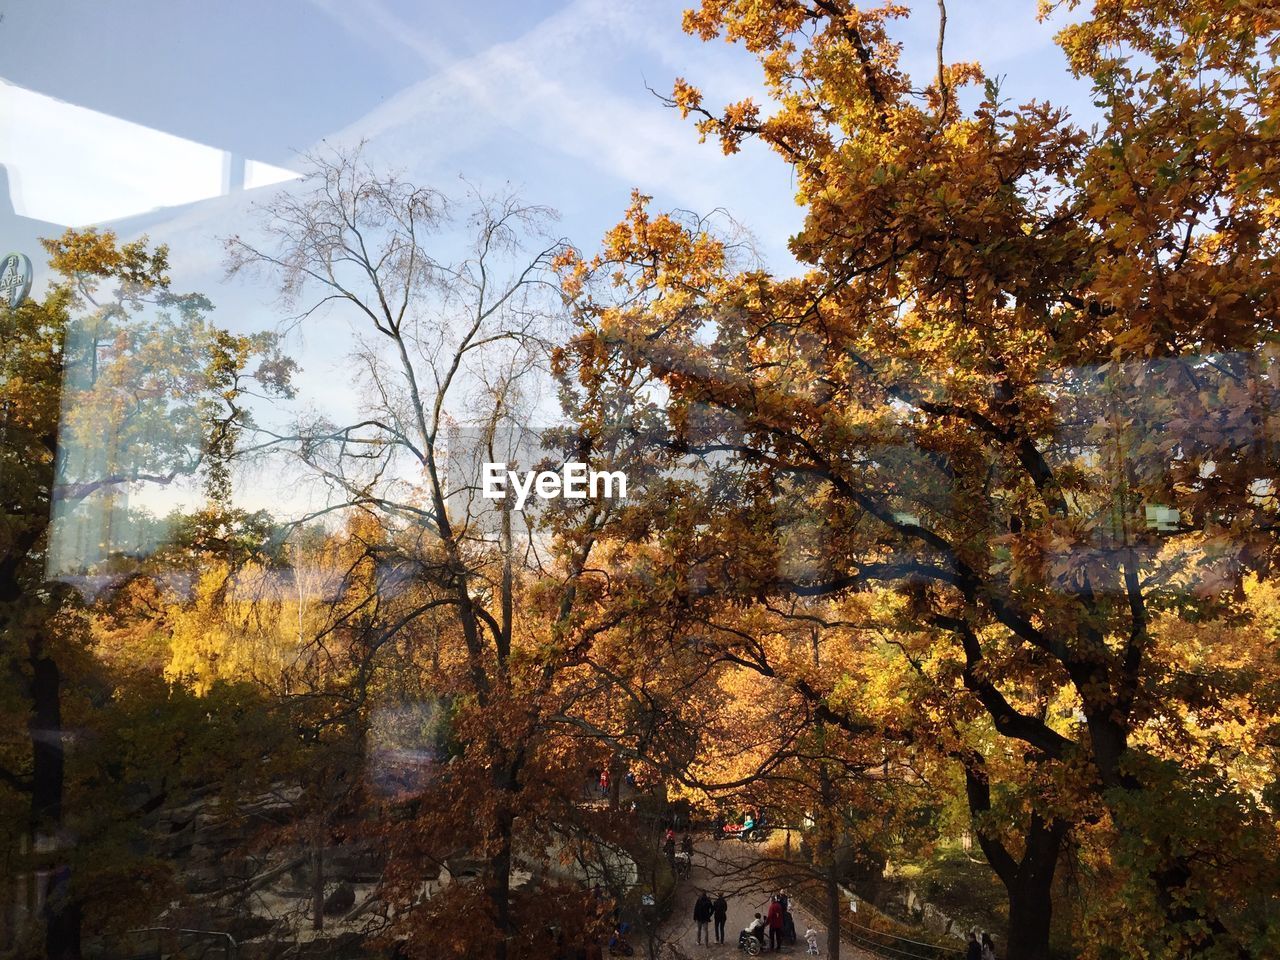 Trees on field seen through window during autumn